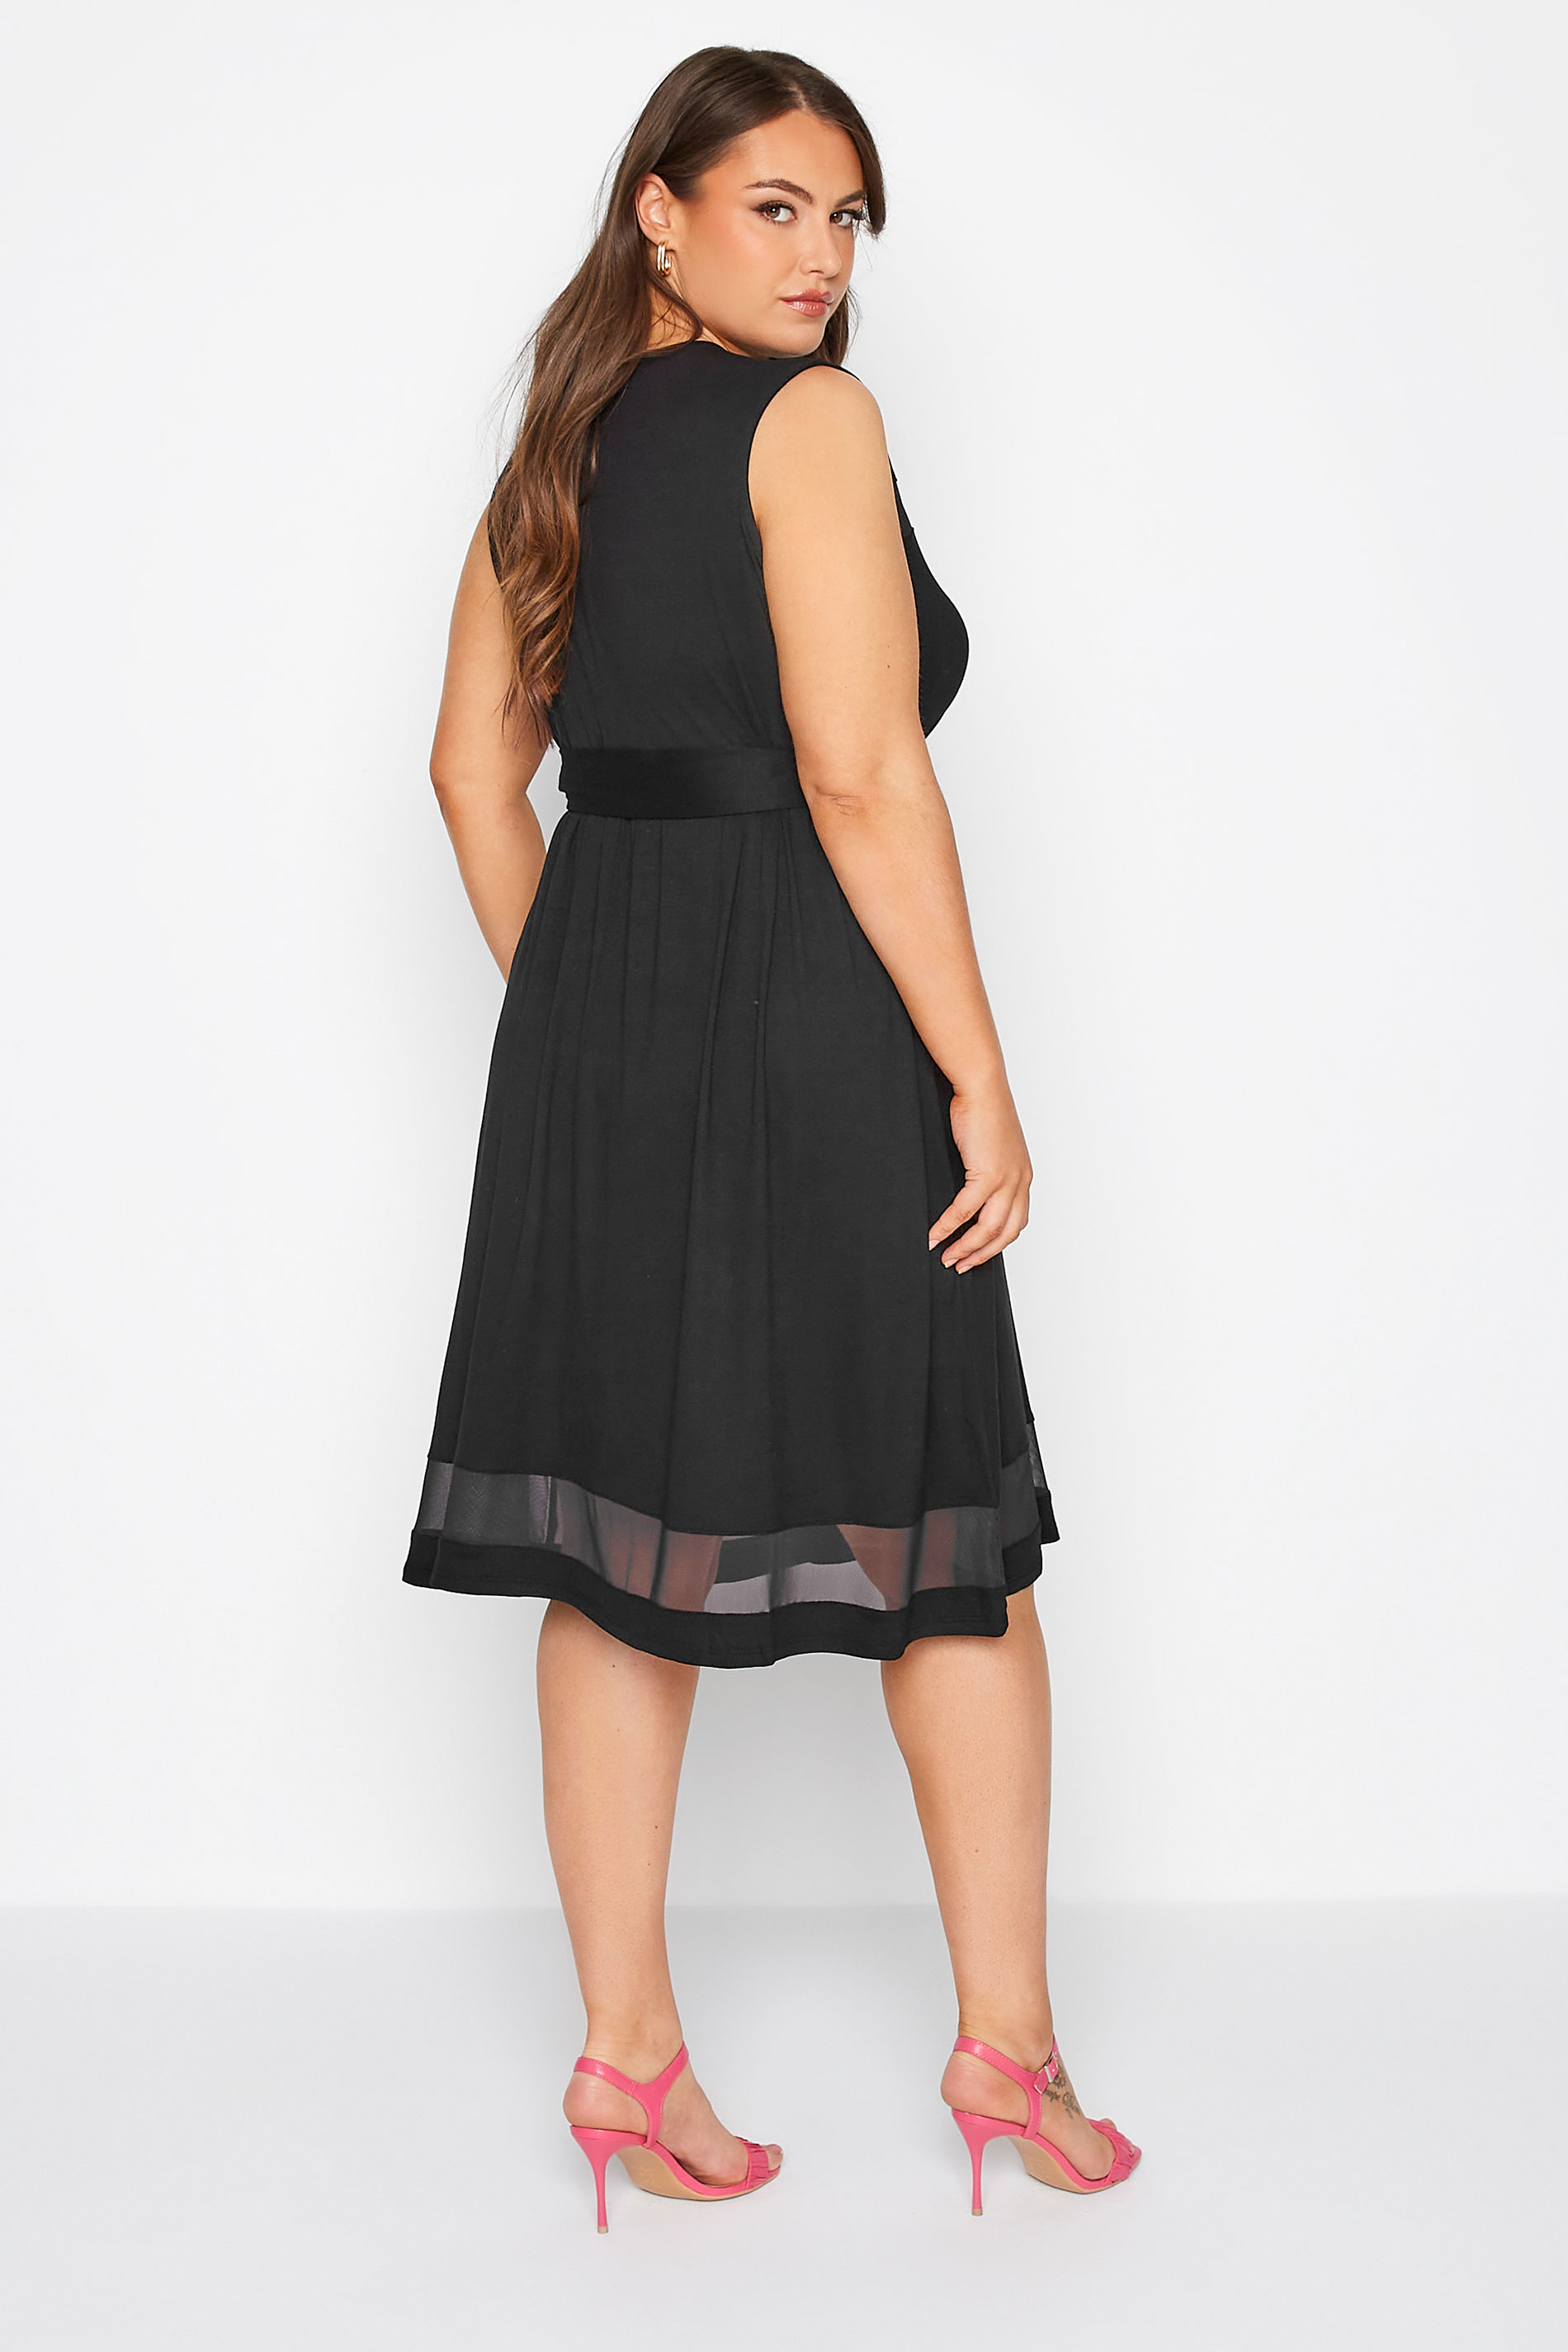 Plus Size Black Mesh Panel Skater Dress | Yours Clothing  3